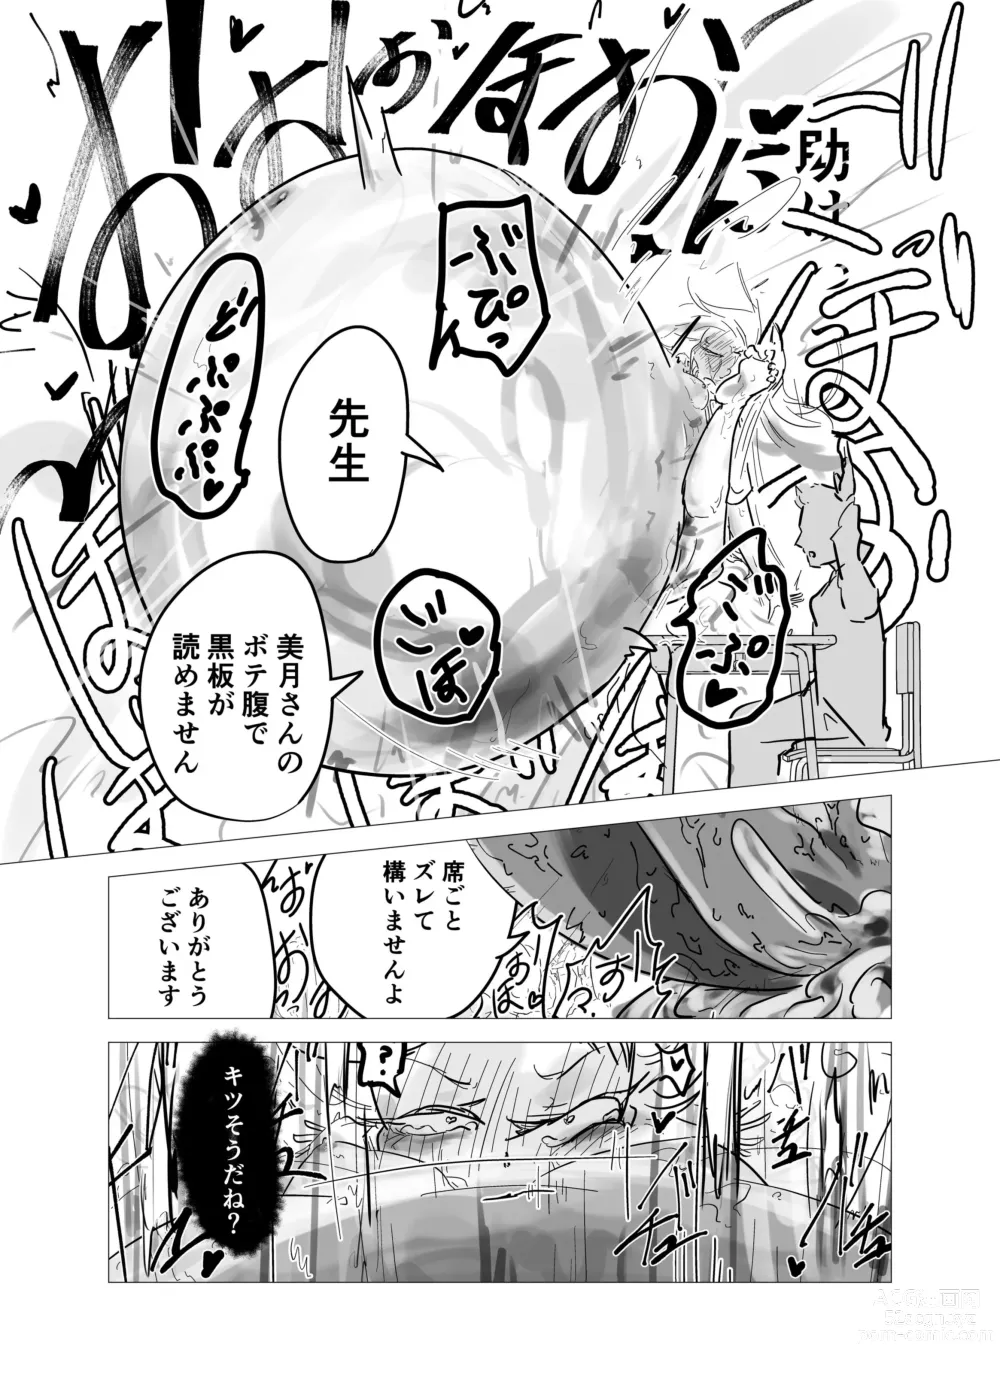 Page 9 of doujinshi kamisama ni tōsen shitanode 1